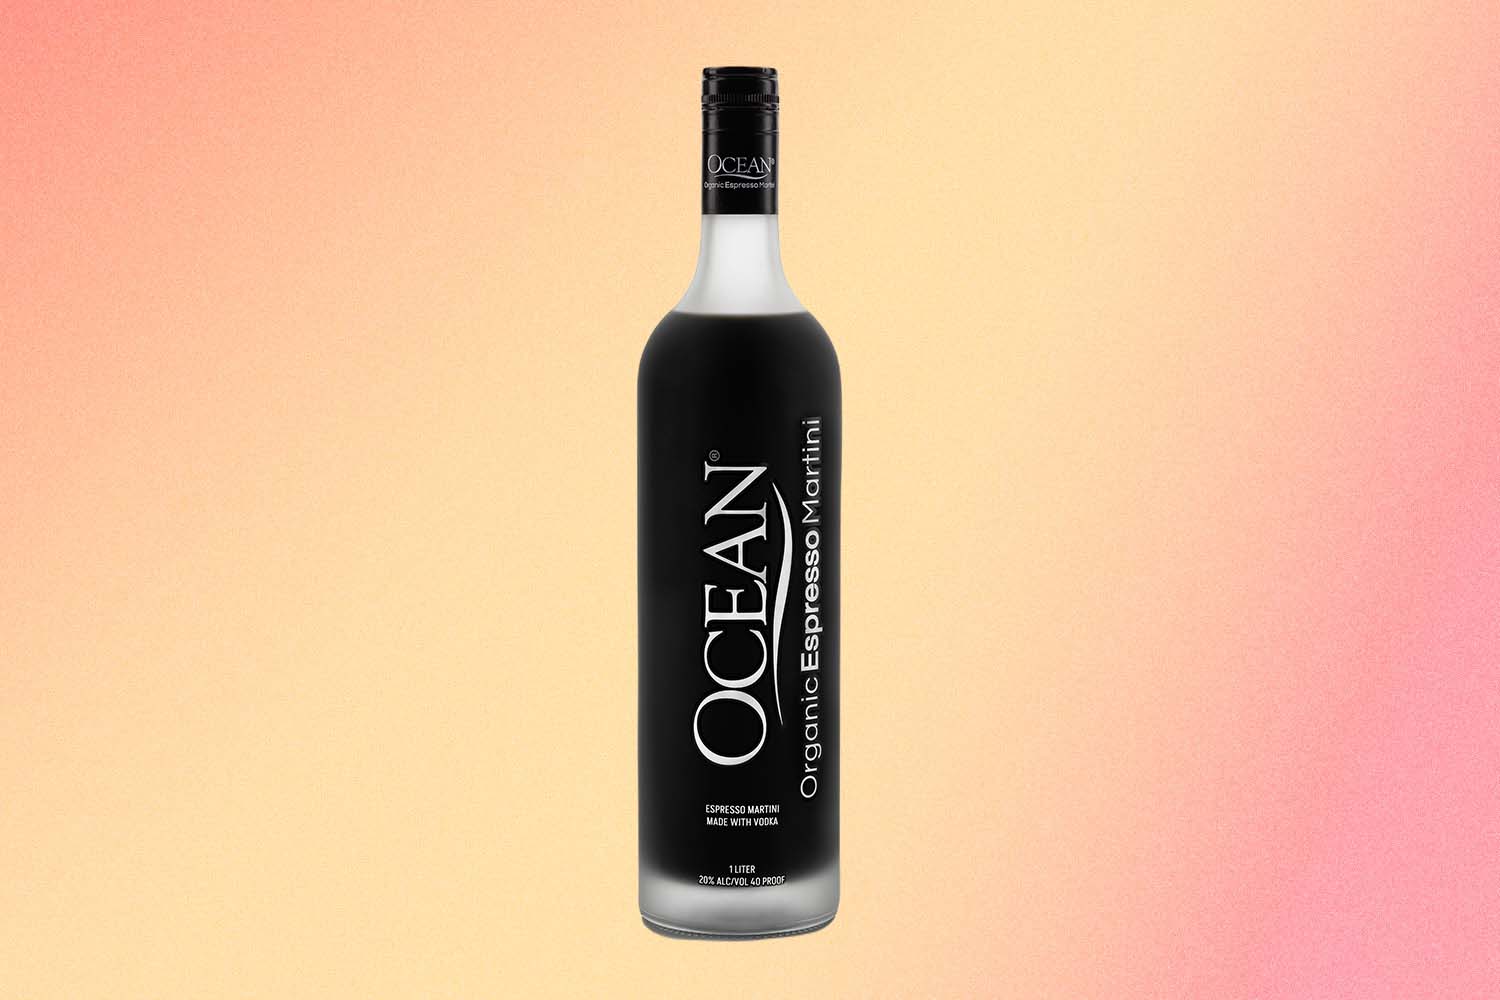 The new bottled Espresso Martini from Ocean Organic Vodka